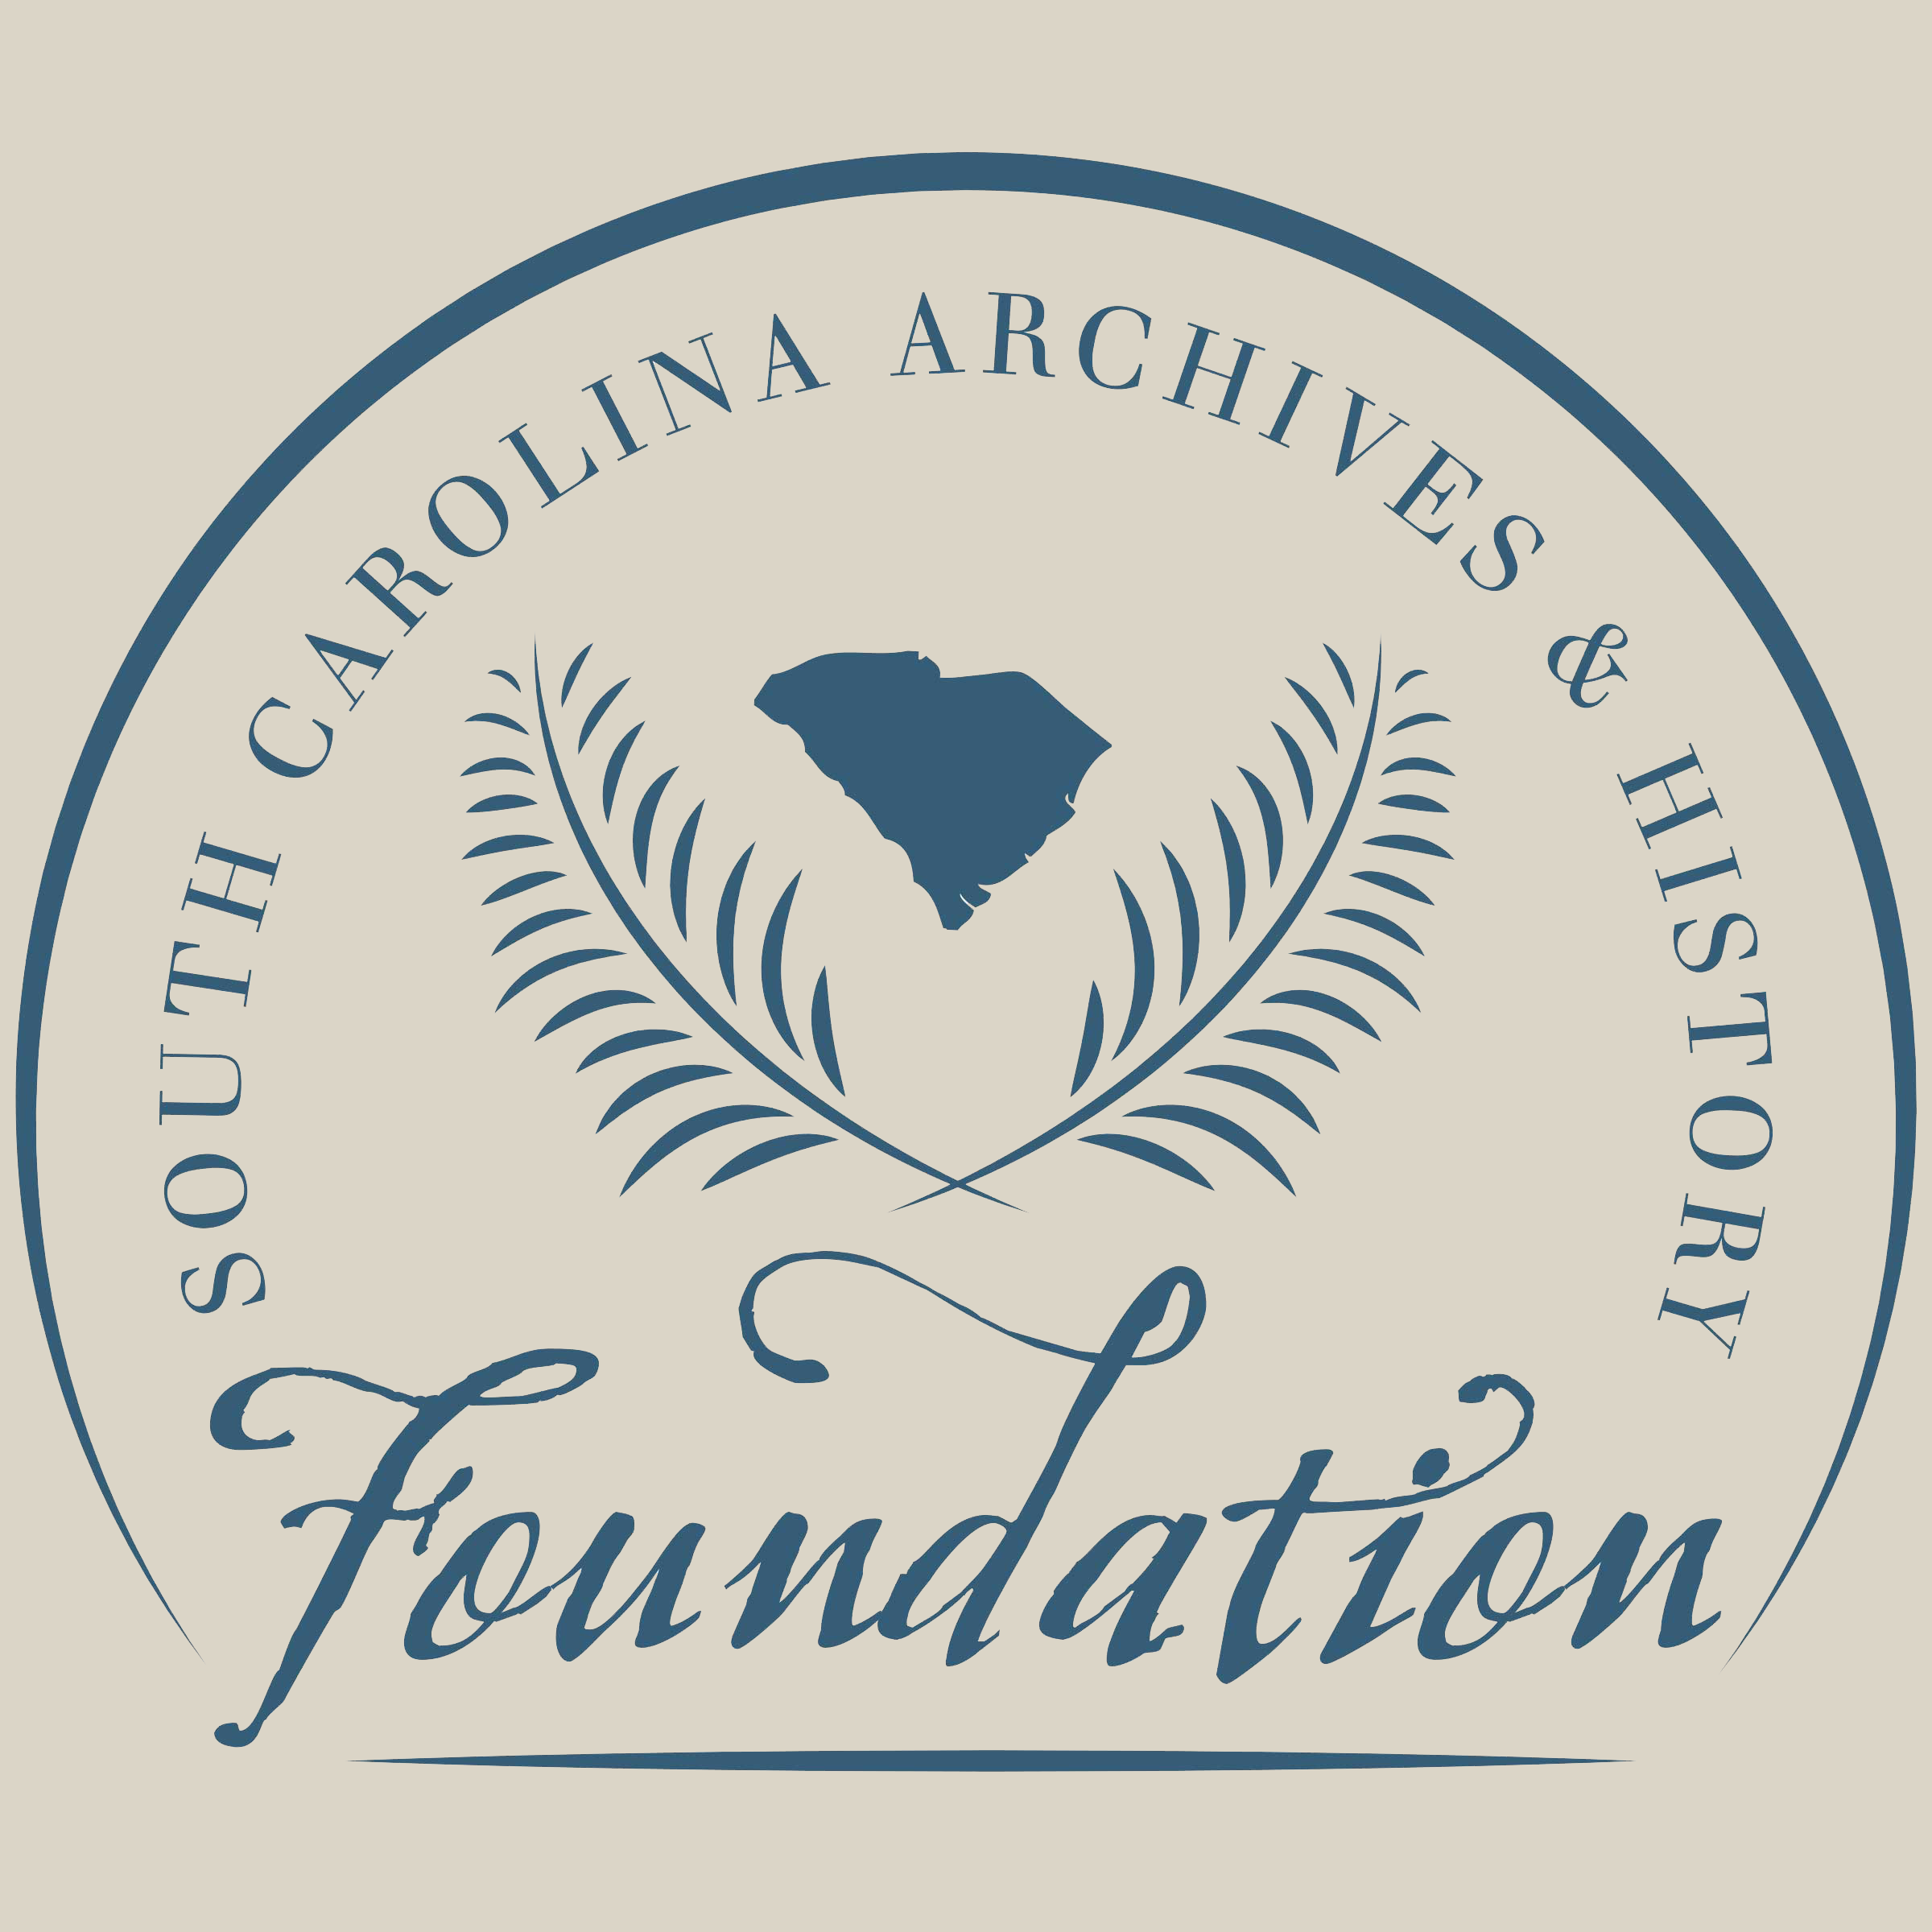 South Carolina Archives and History Center